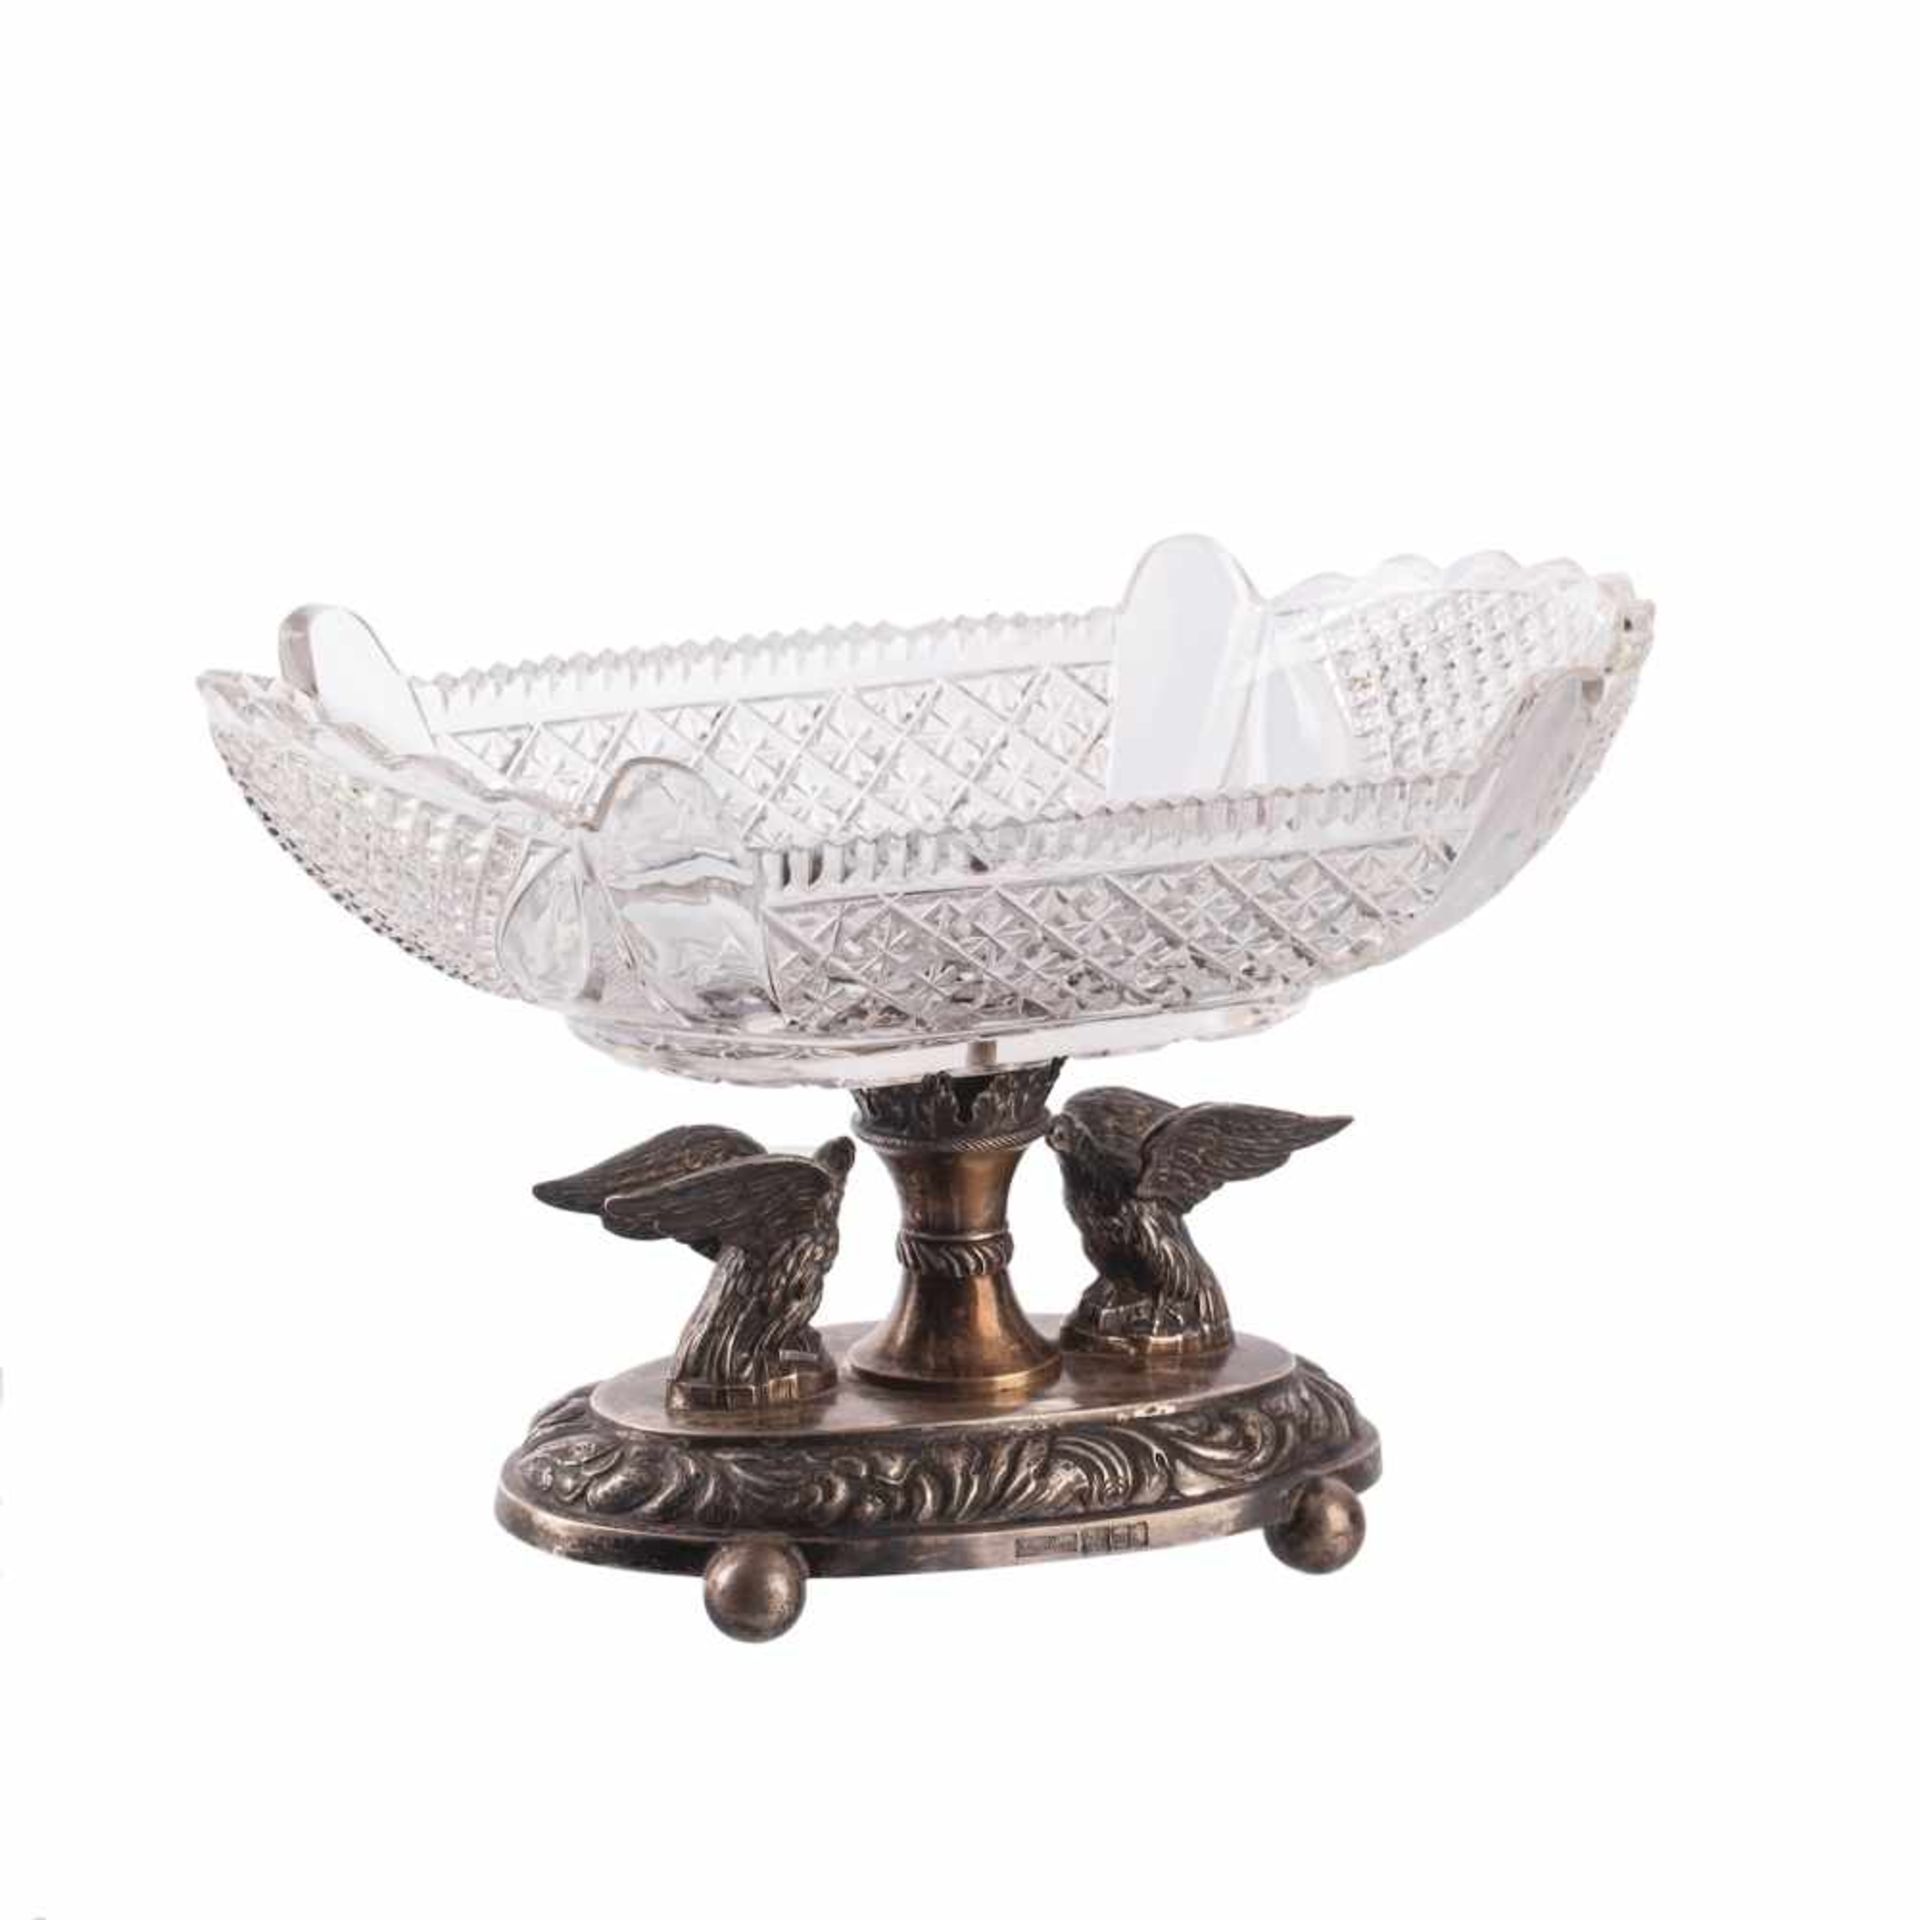 A Russian silver-gilt & cut-crystal vaseA Russian silver-gilt and cut-crystal vase with cast swan